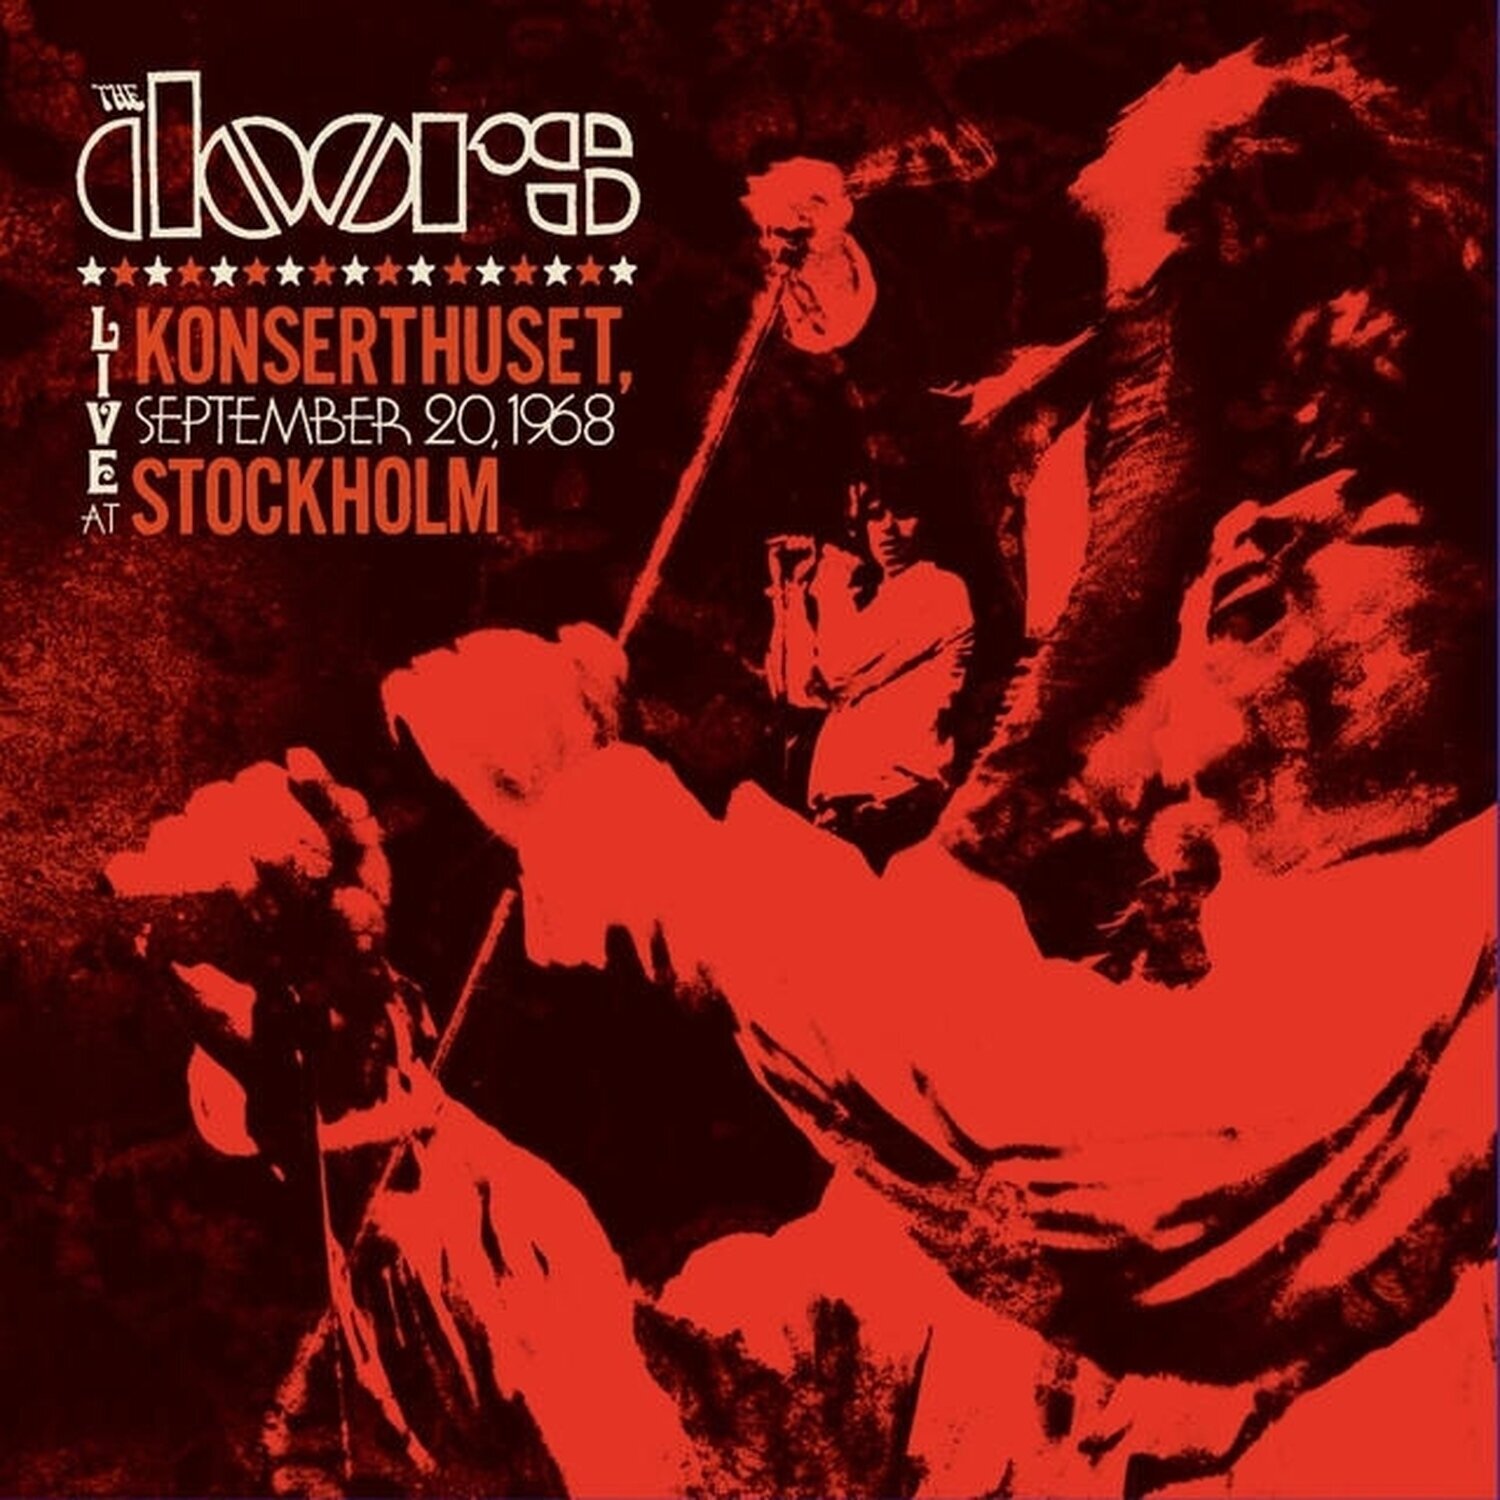 CD muzica The Doors - Live At Konserthuset, Stockholm, 1968 (Rsd 2024) (2 CD)